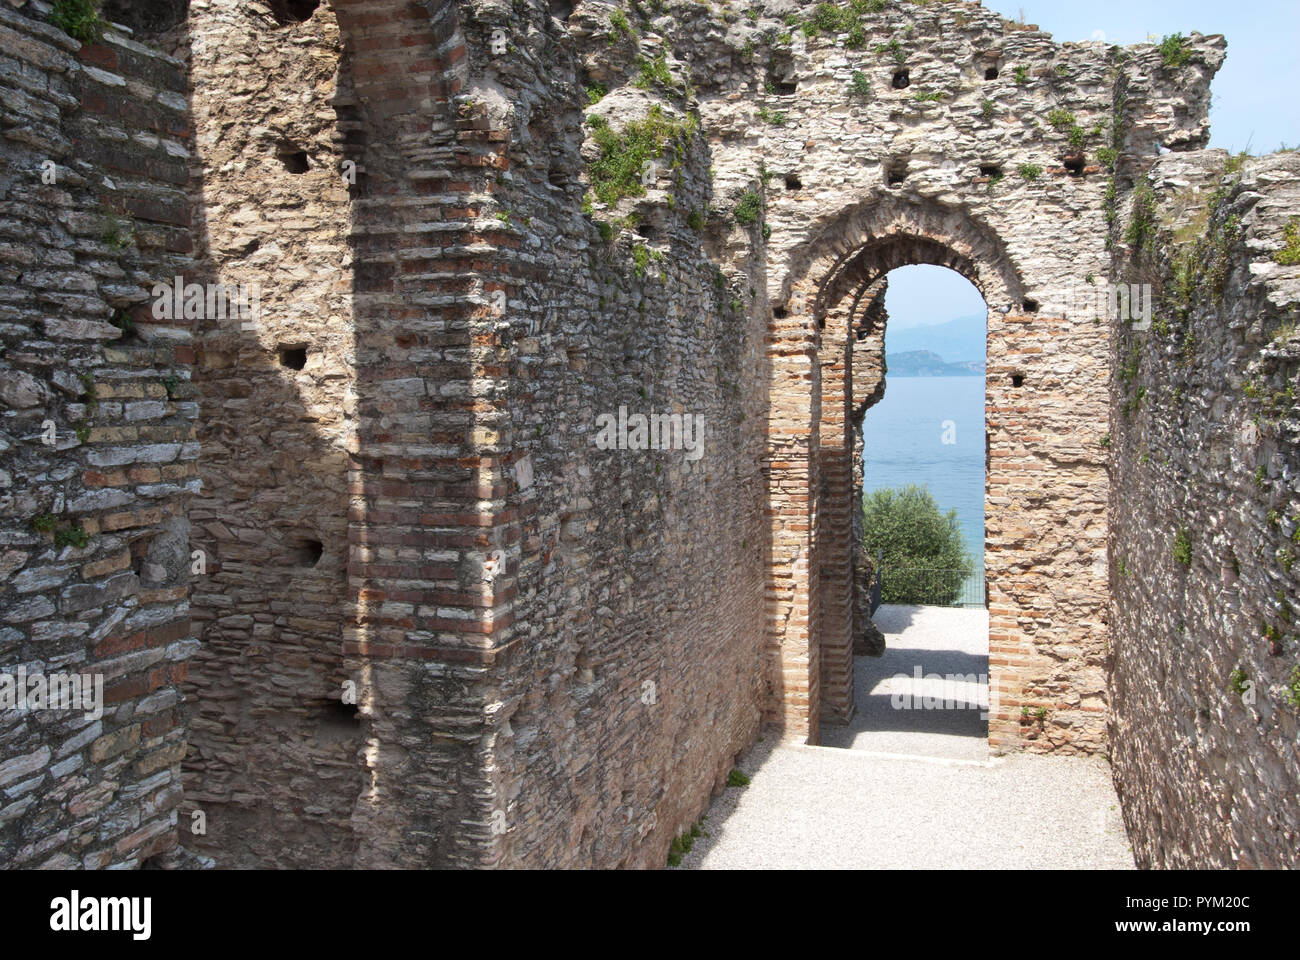 Roman ruins at archaeological site on Sirmione Peninsula, Lake Garda, Italy Stock Photo